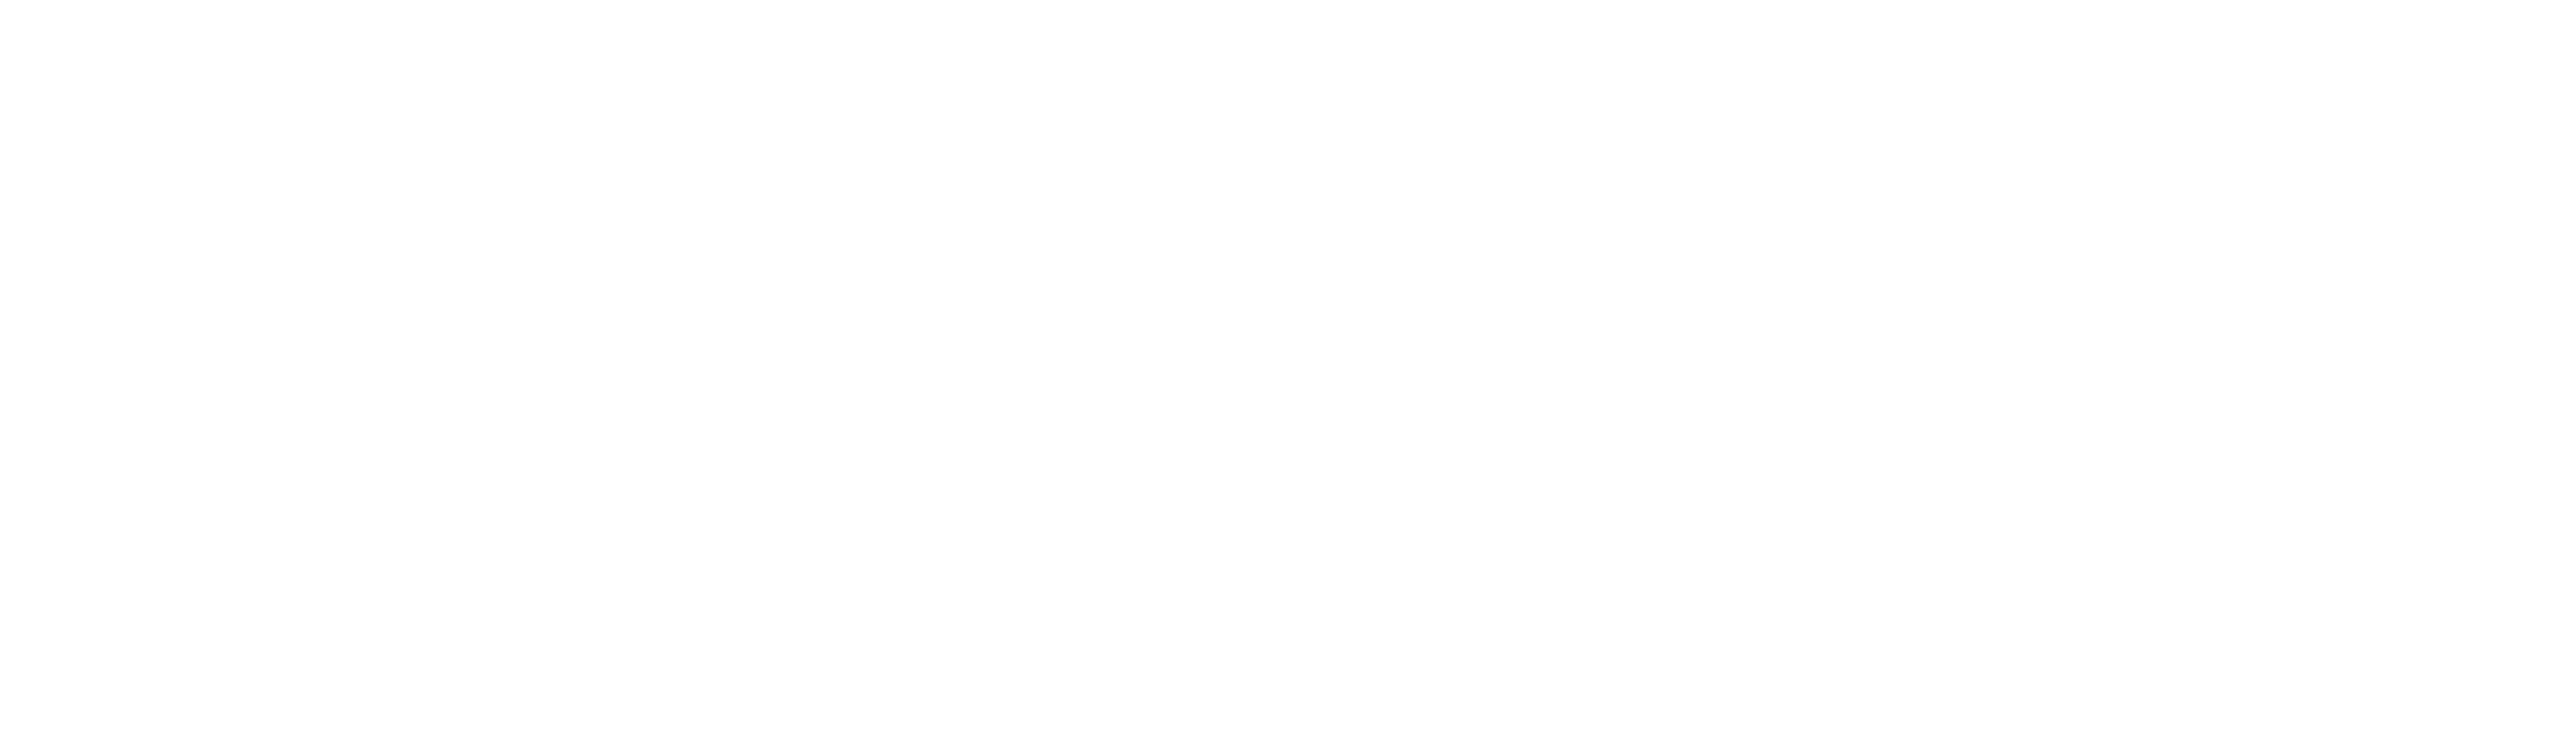 Randstad 3 - White